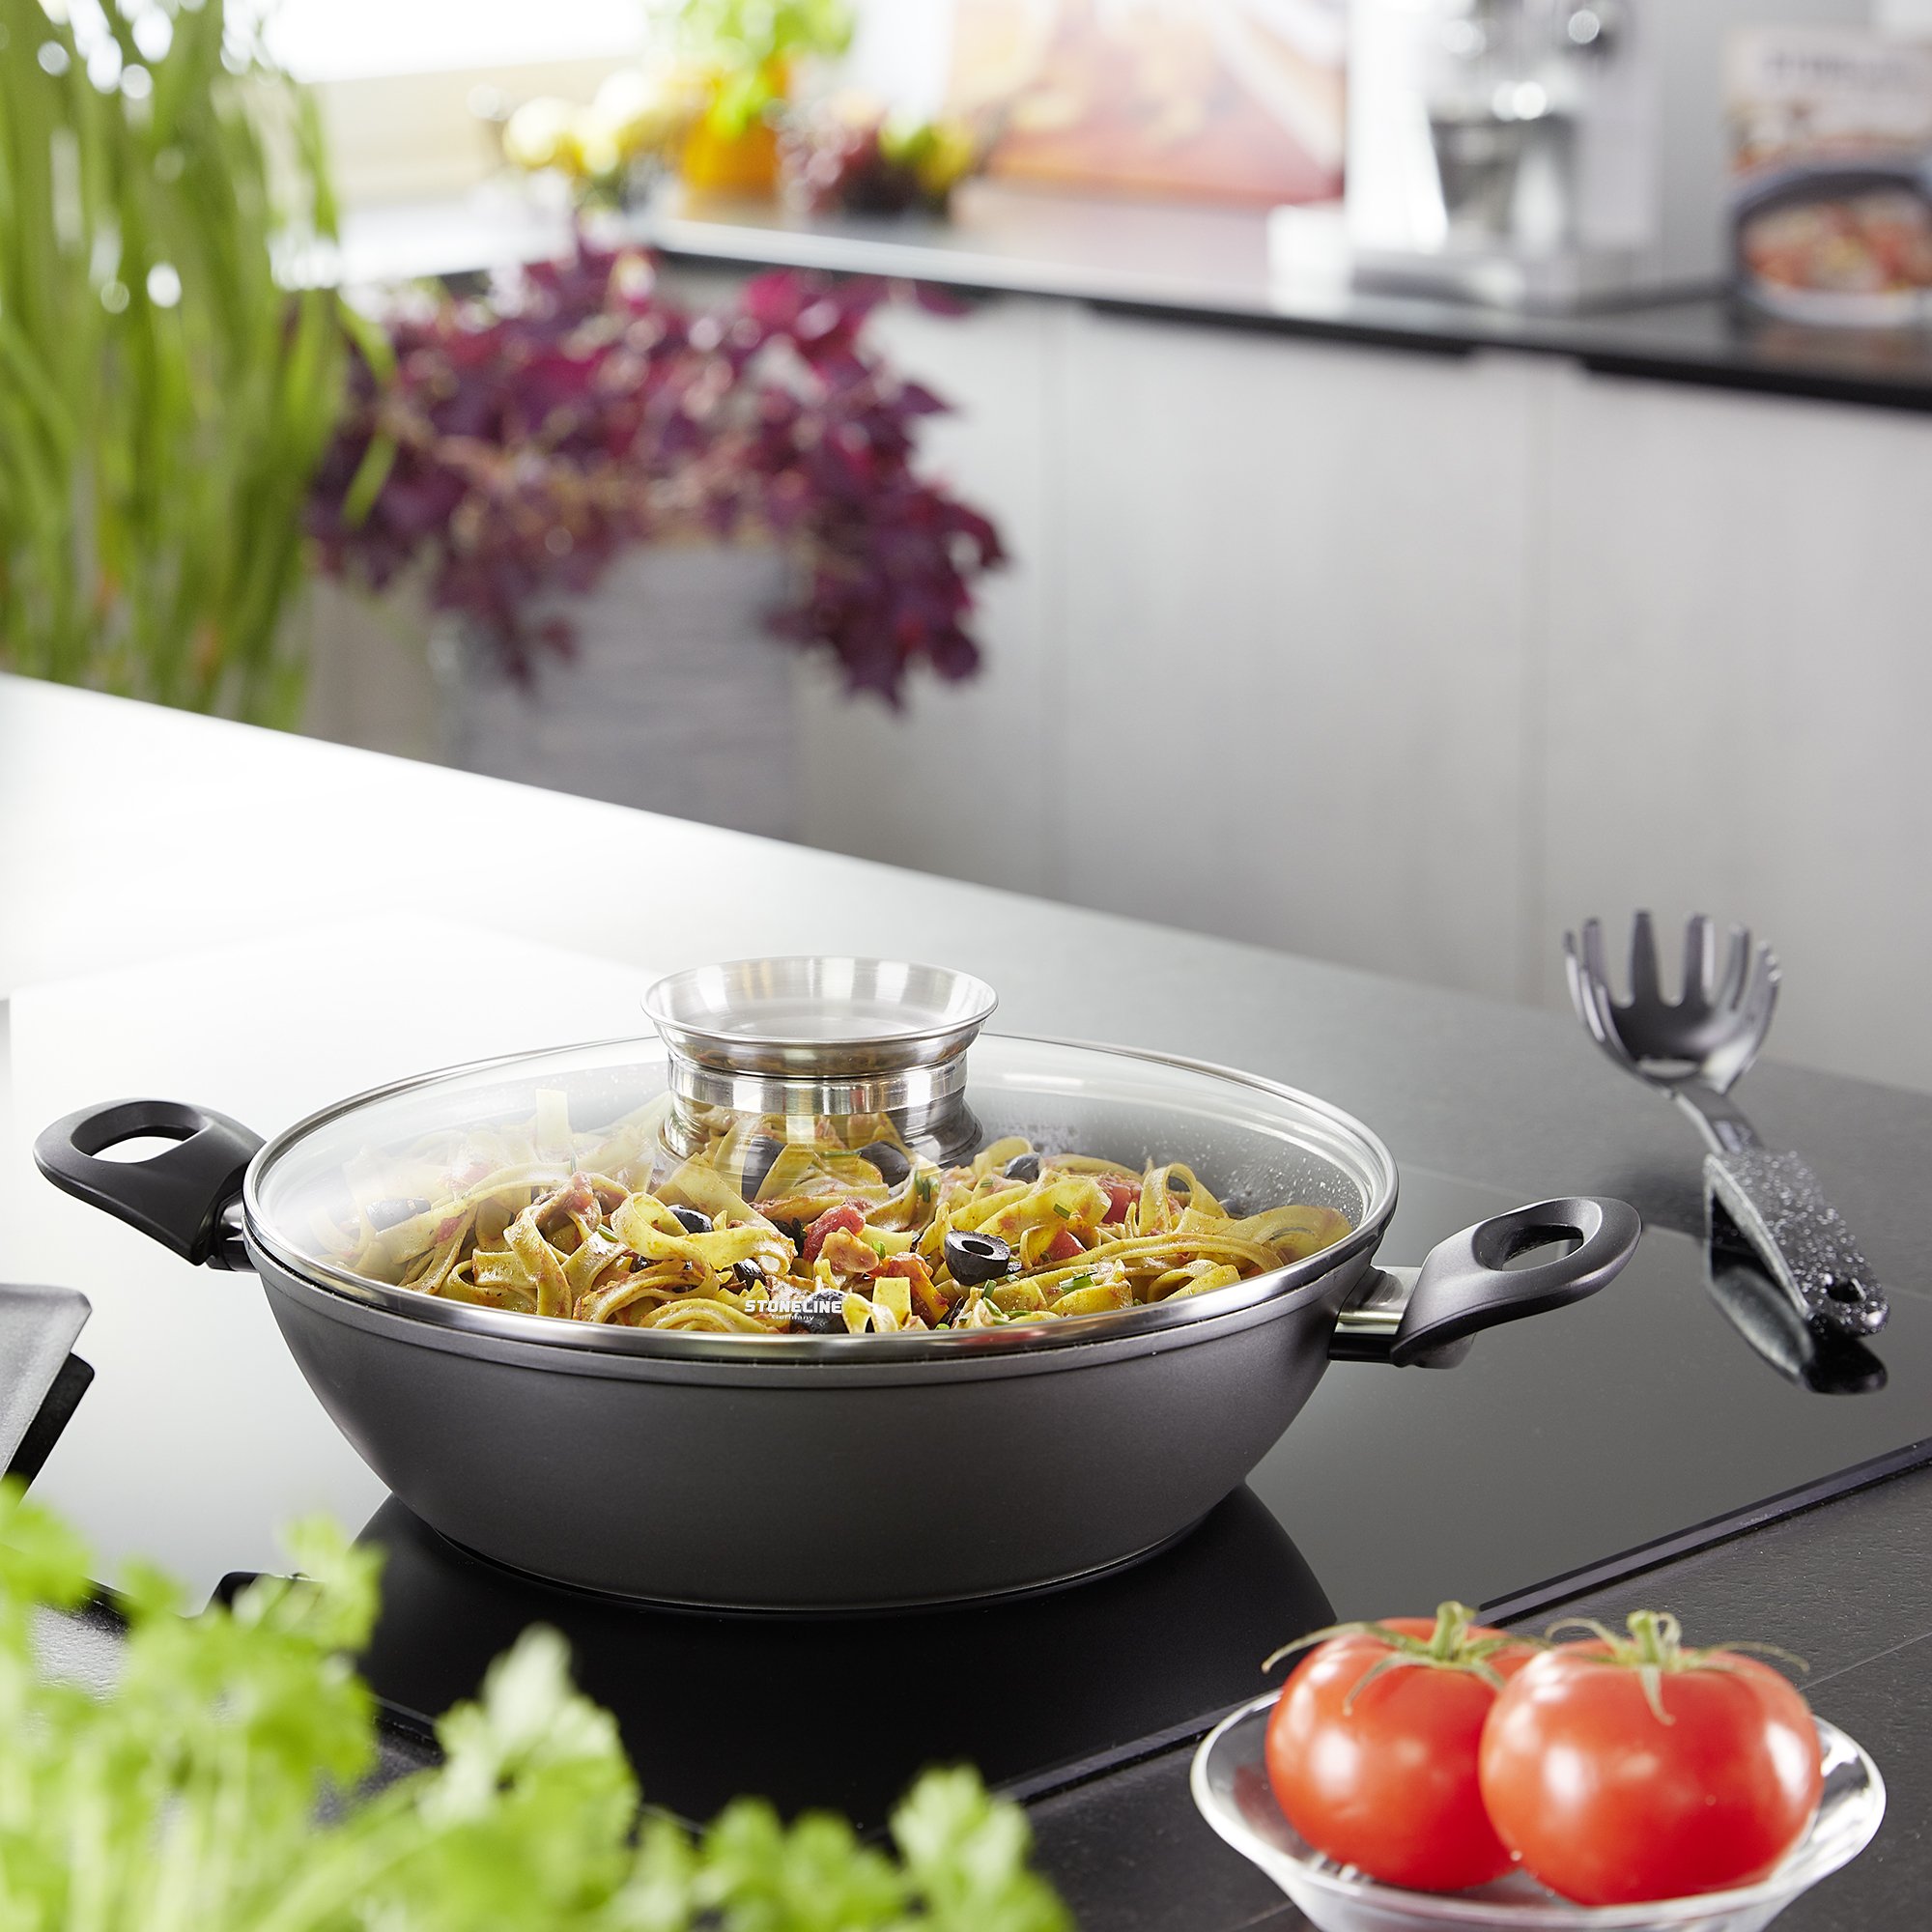 STONELINE® CERAMIC Serving Pan 28 cm, with Aroma Lid, Non-Stick Pan | CERAMIC Cookware